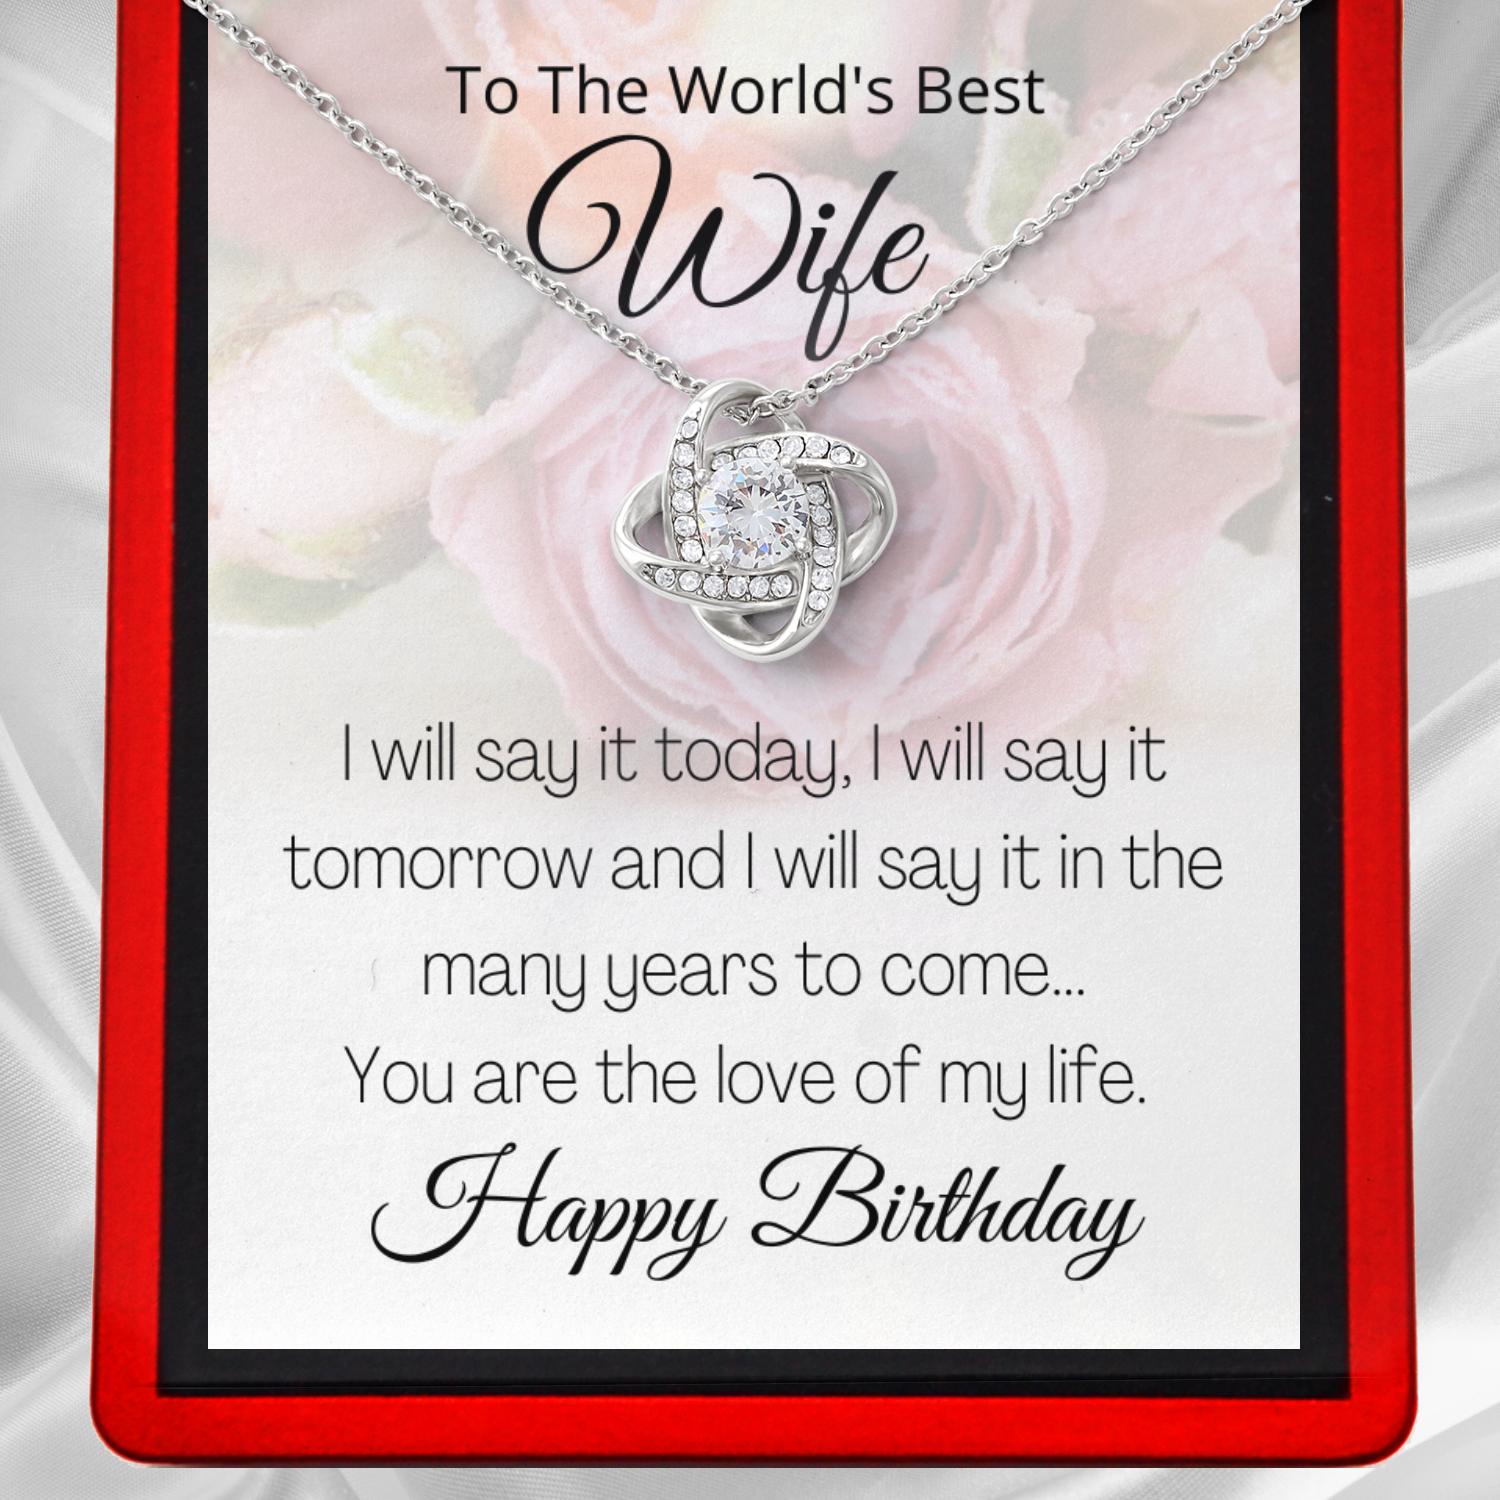 Happy Birthday World's Best Wife - Love Knot Necklace WF9